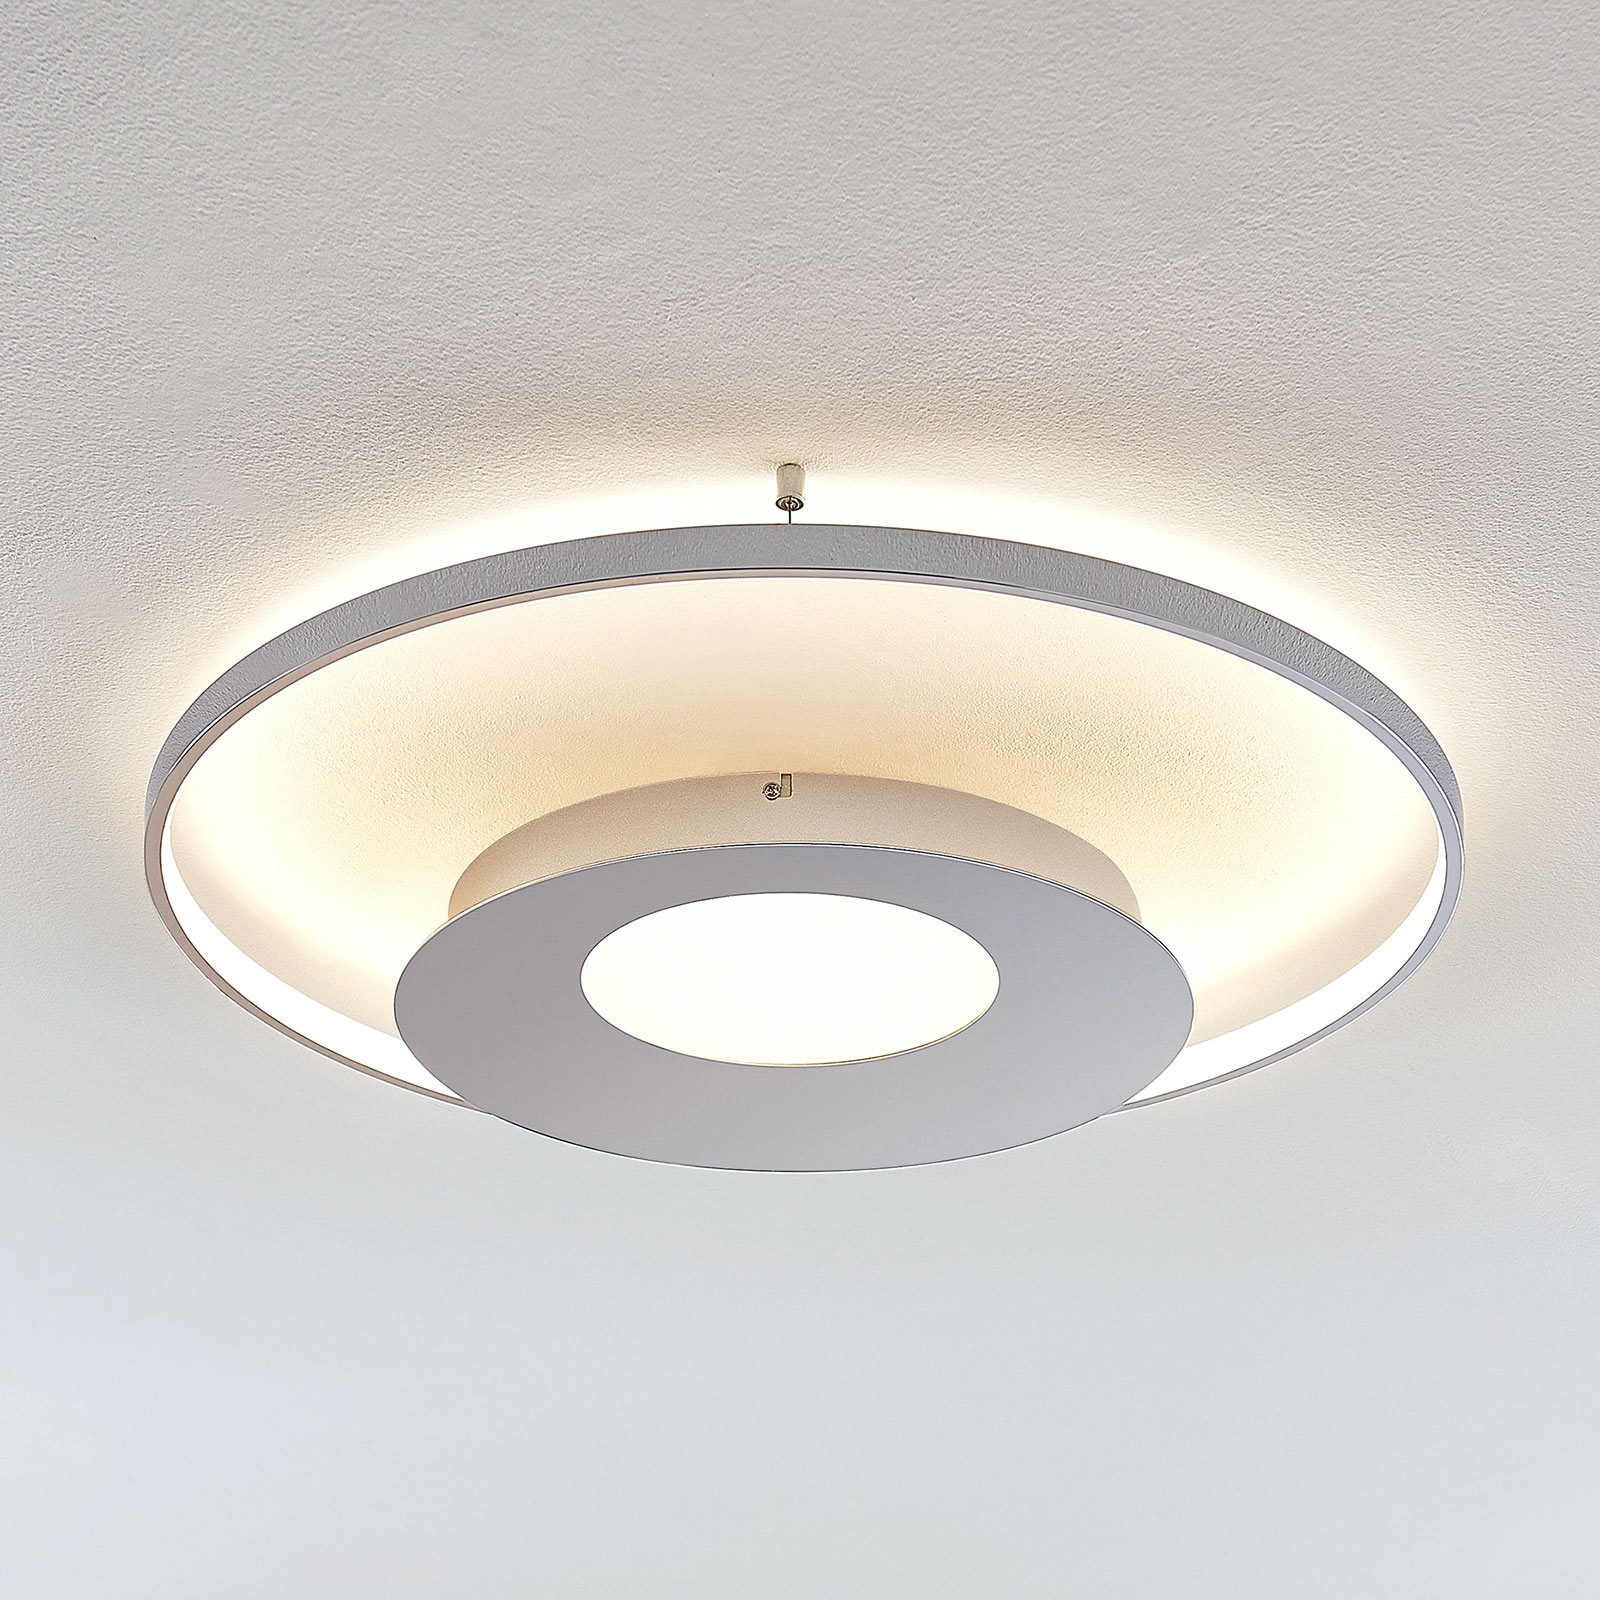 LED-kattovalaisin Anays, pyöreä, 62 cm